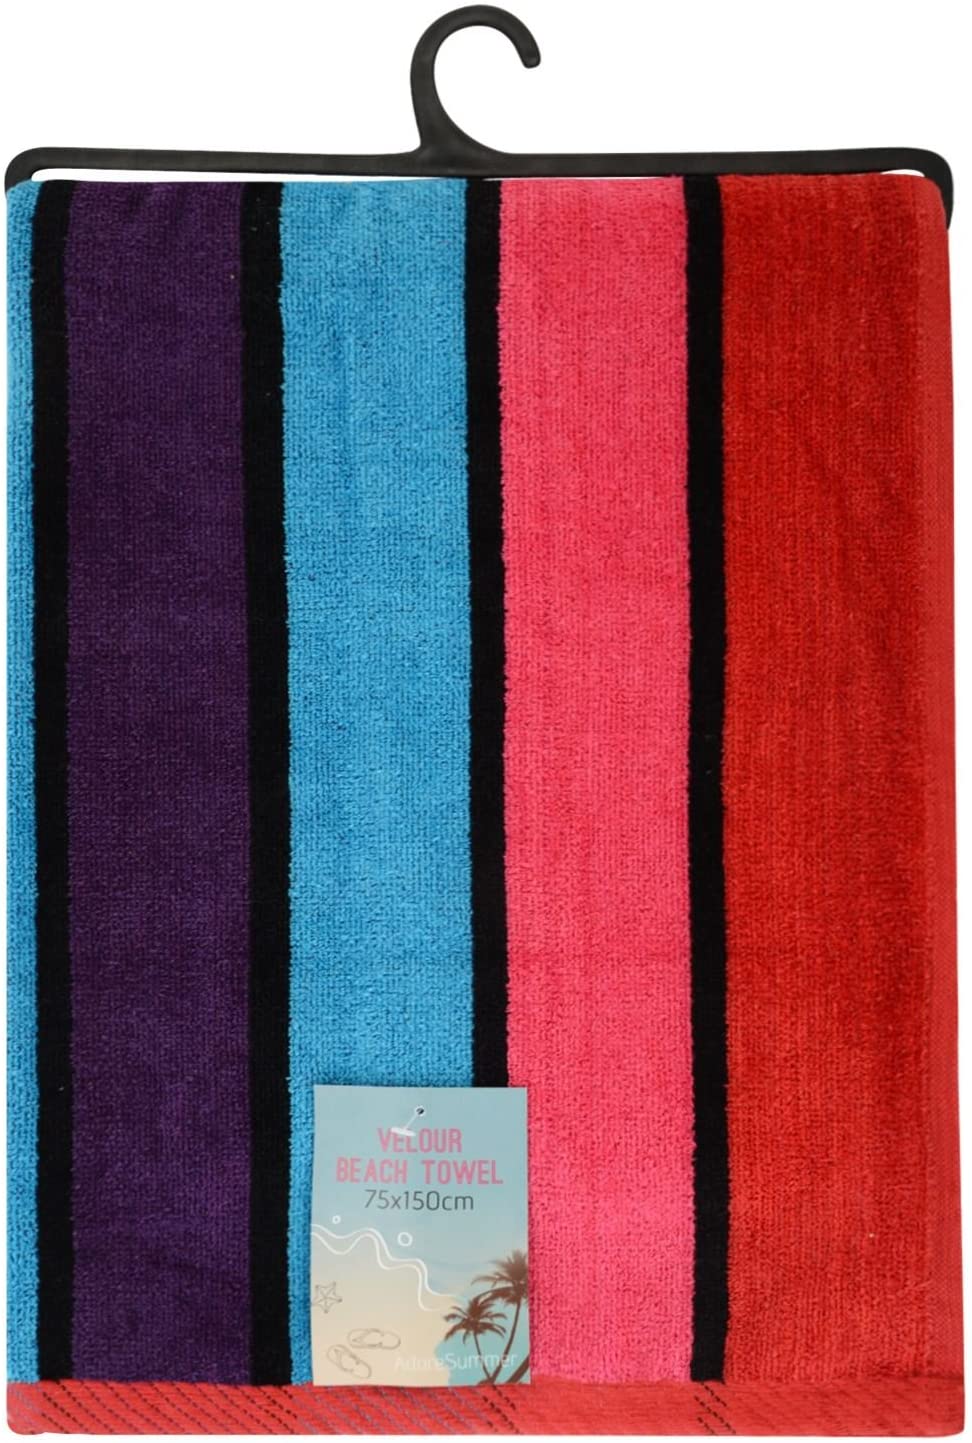 Large Beach Towel Velour Multi Striped Purple Blue Cerise Red 75cm x 150cm